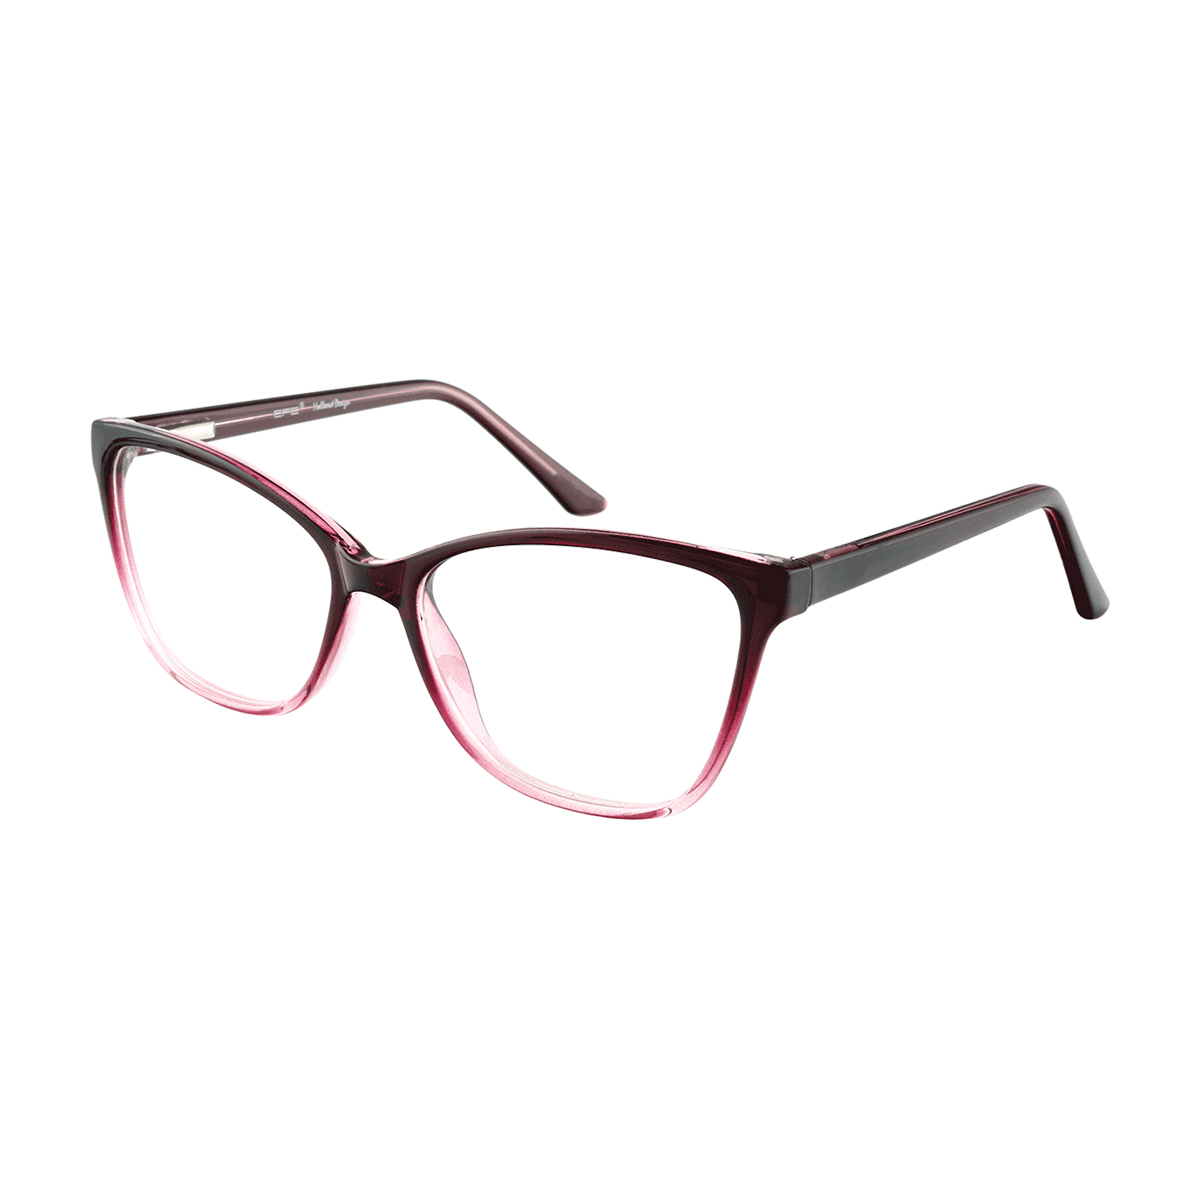 Asies - Cat-eye Pink-Black Reading Glasses for Women